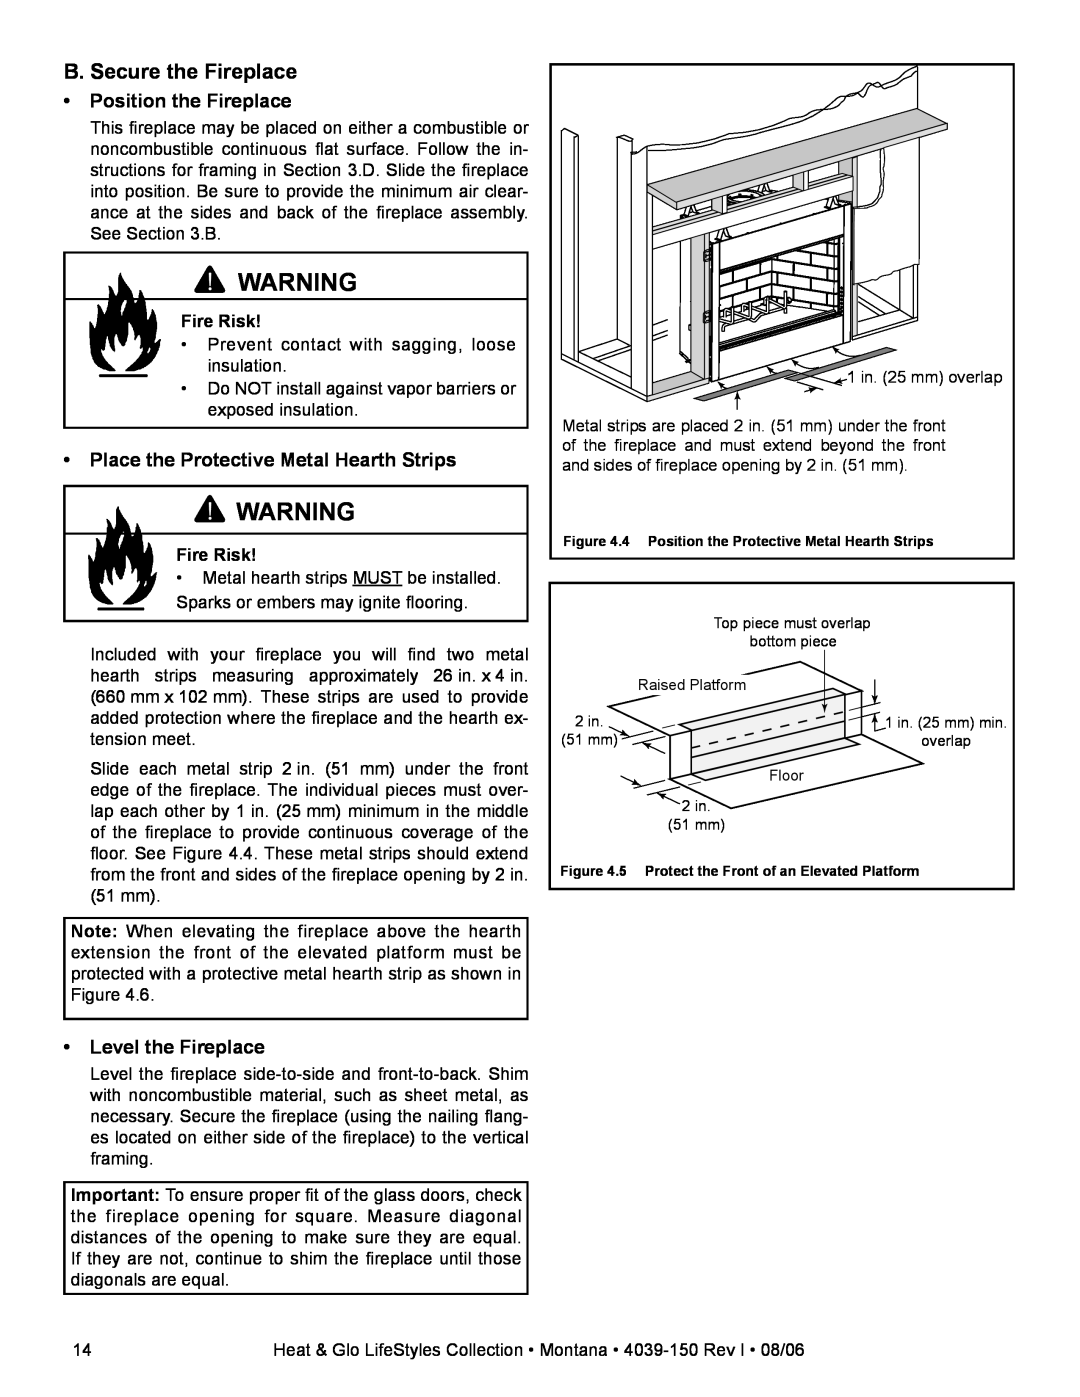 Heat & Glo LifeStyle Montana-42 B. Secure the Fireplace, Position the Fireplace, Place the Protective Metal Hearth Strips 